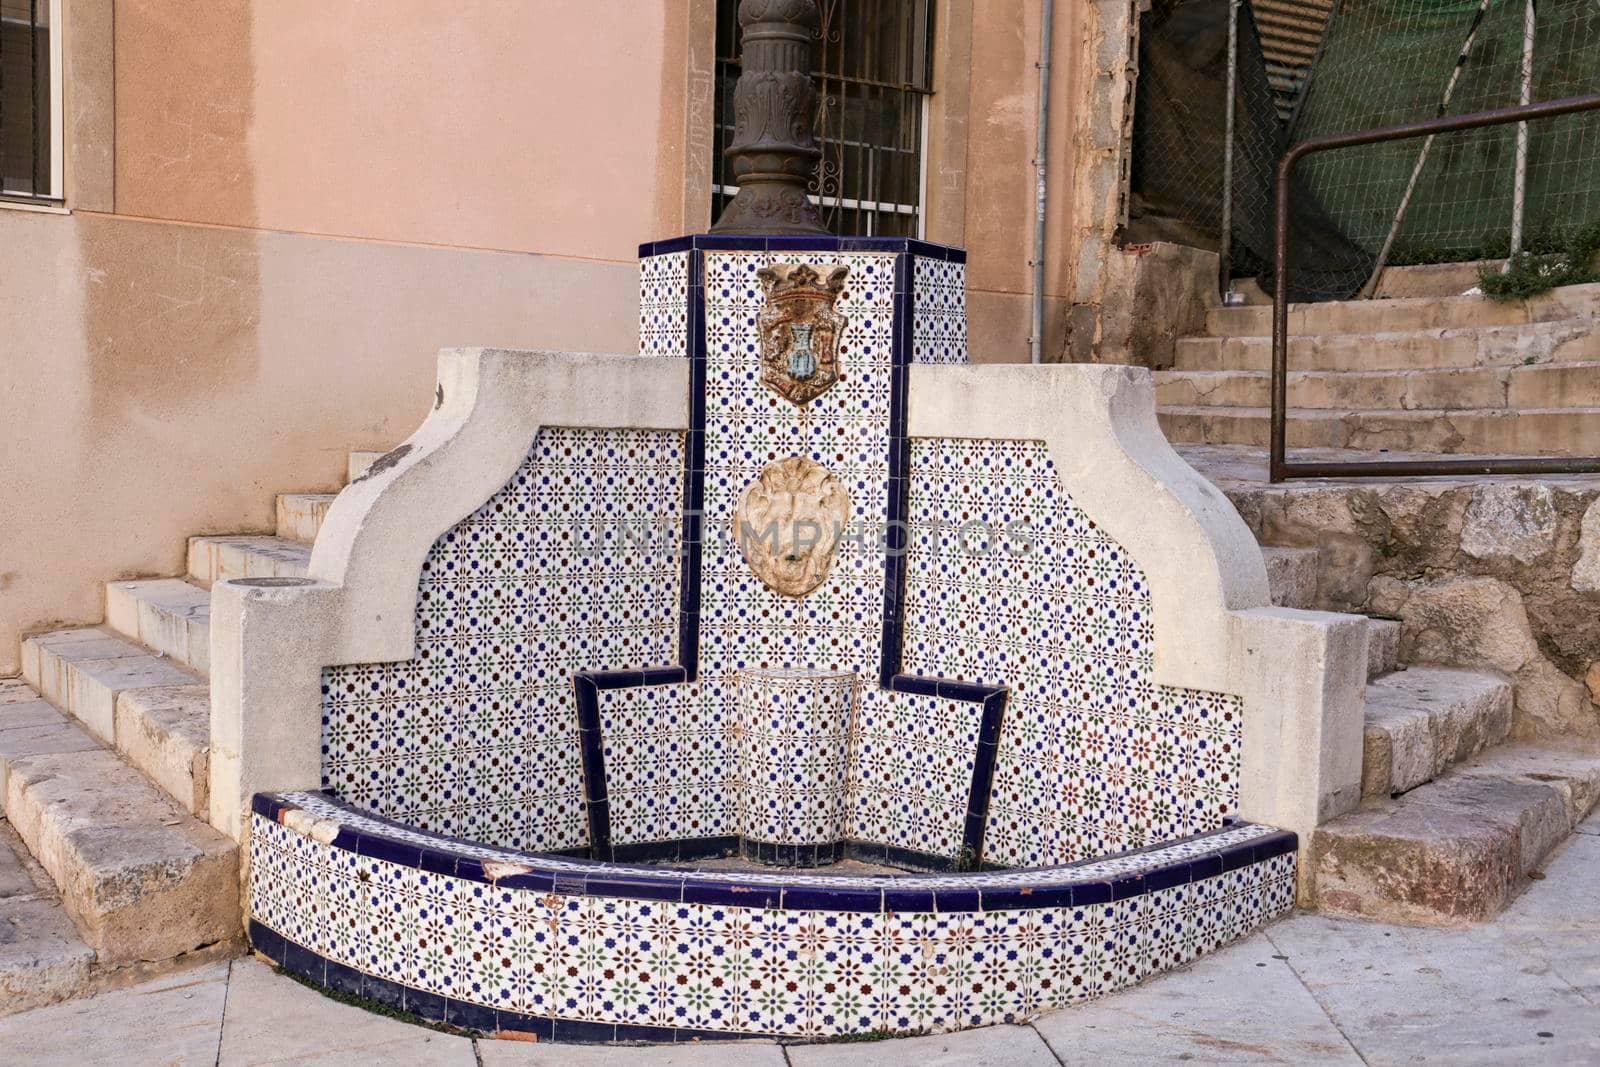 Cartagena, Murcia, Spain- July 18, 2022: Fountain made of tiles and stone in San Gines de la Jara Square in Cartagena village, Murcia